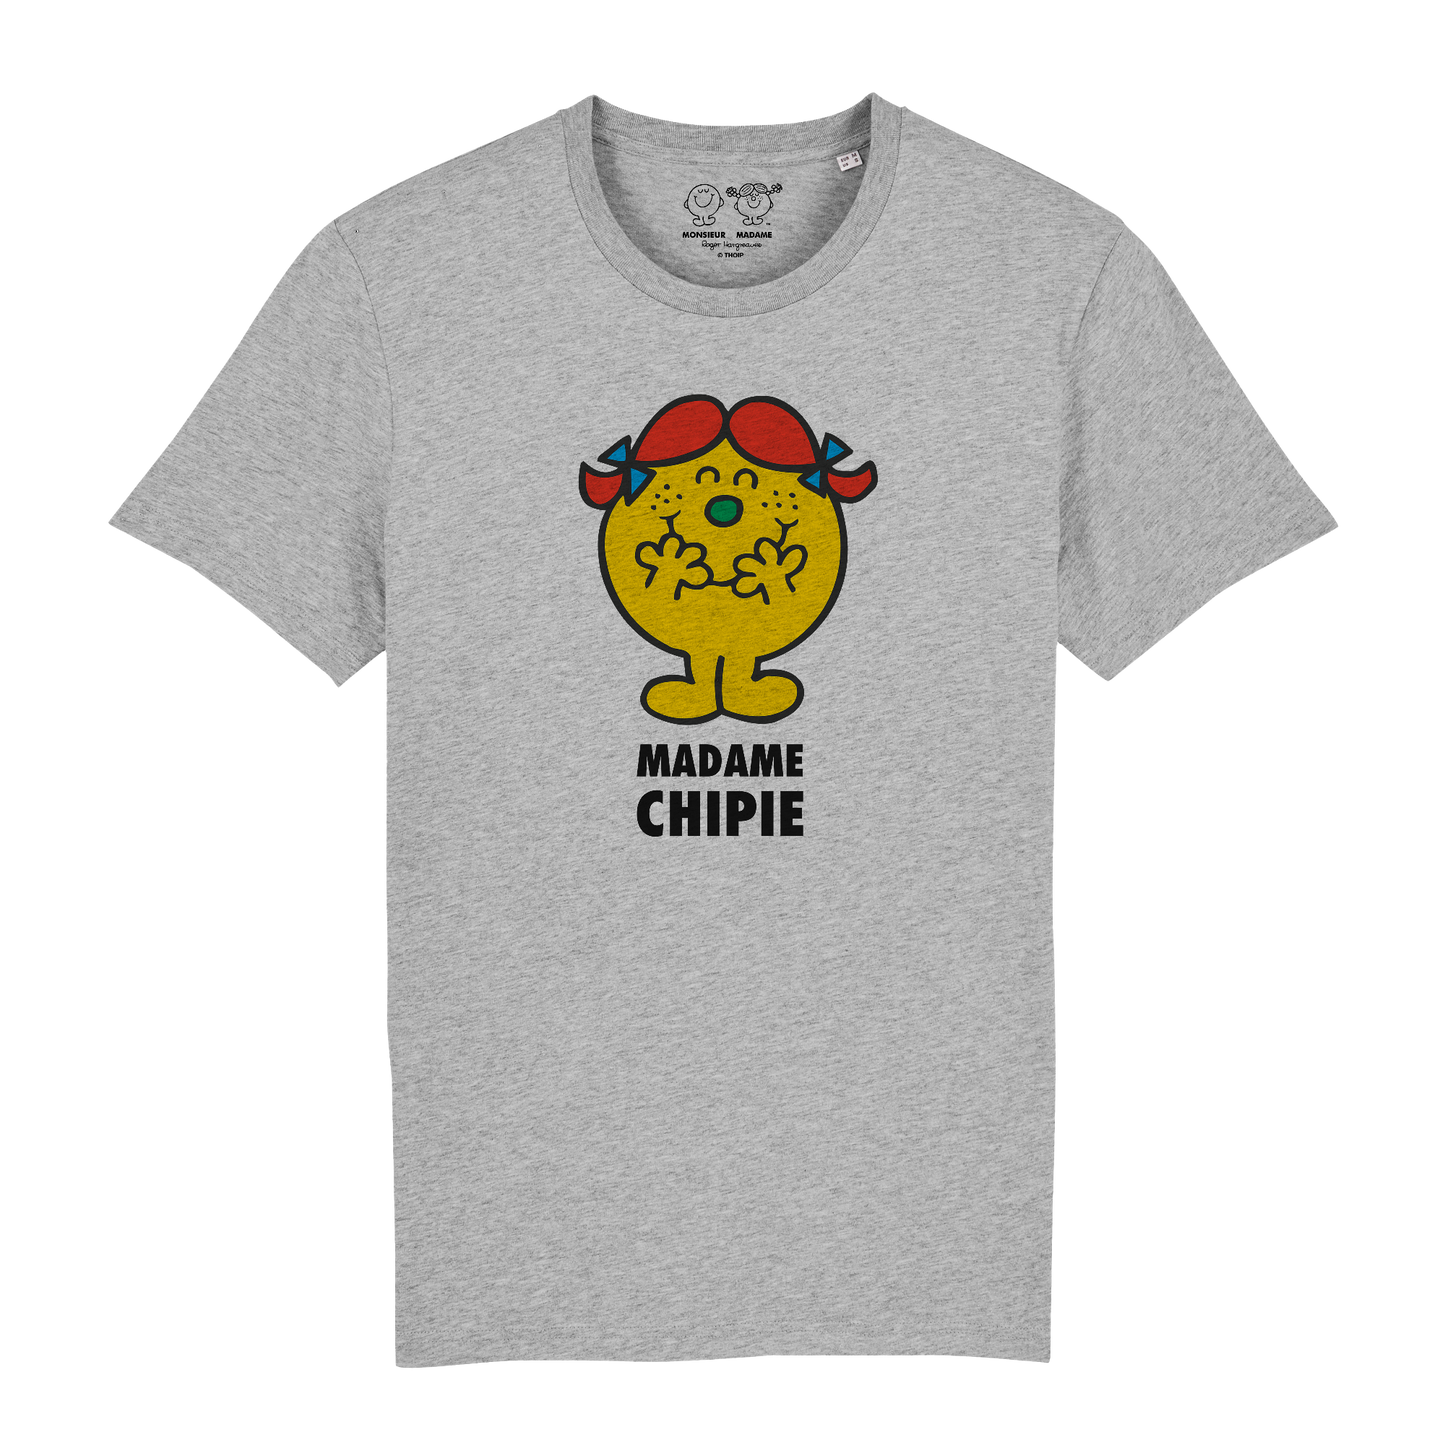 T-Shirt Fille Madame Chipie Monsieur Madame